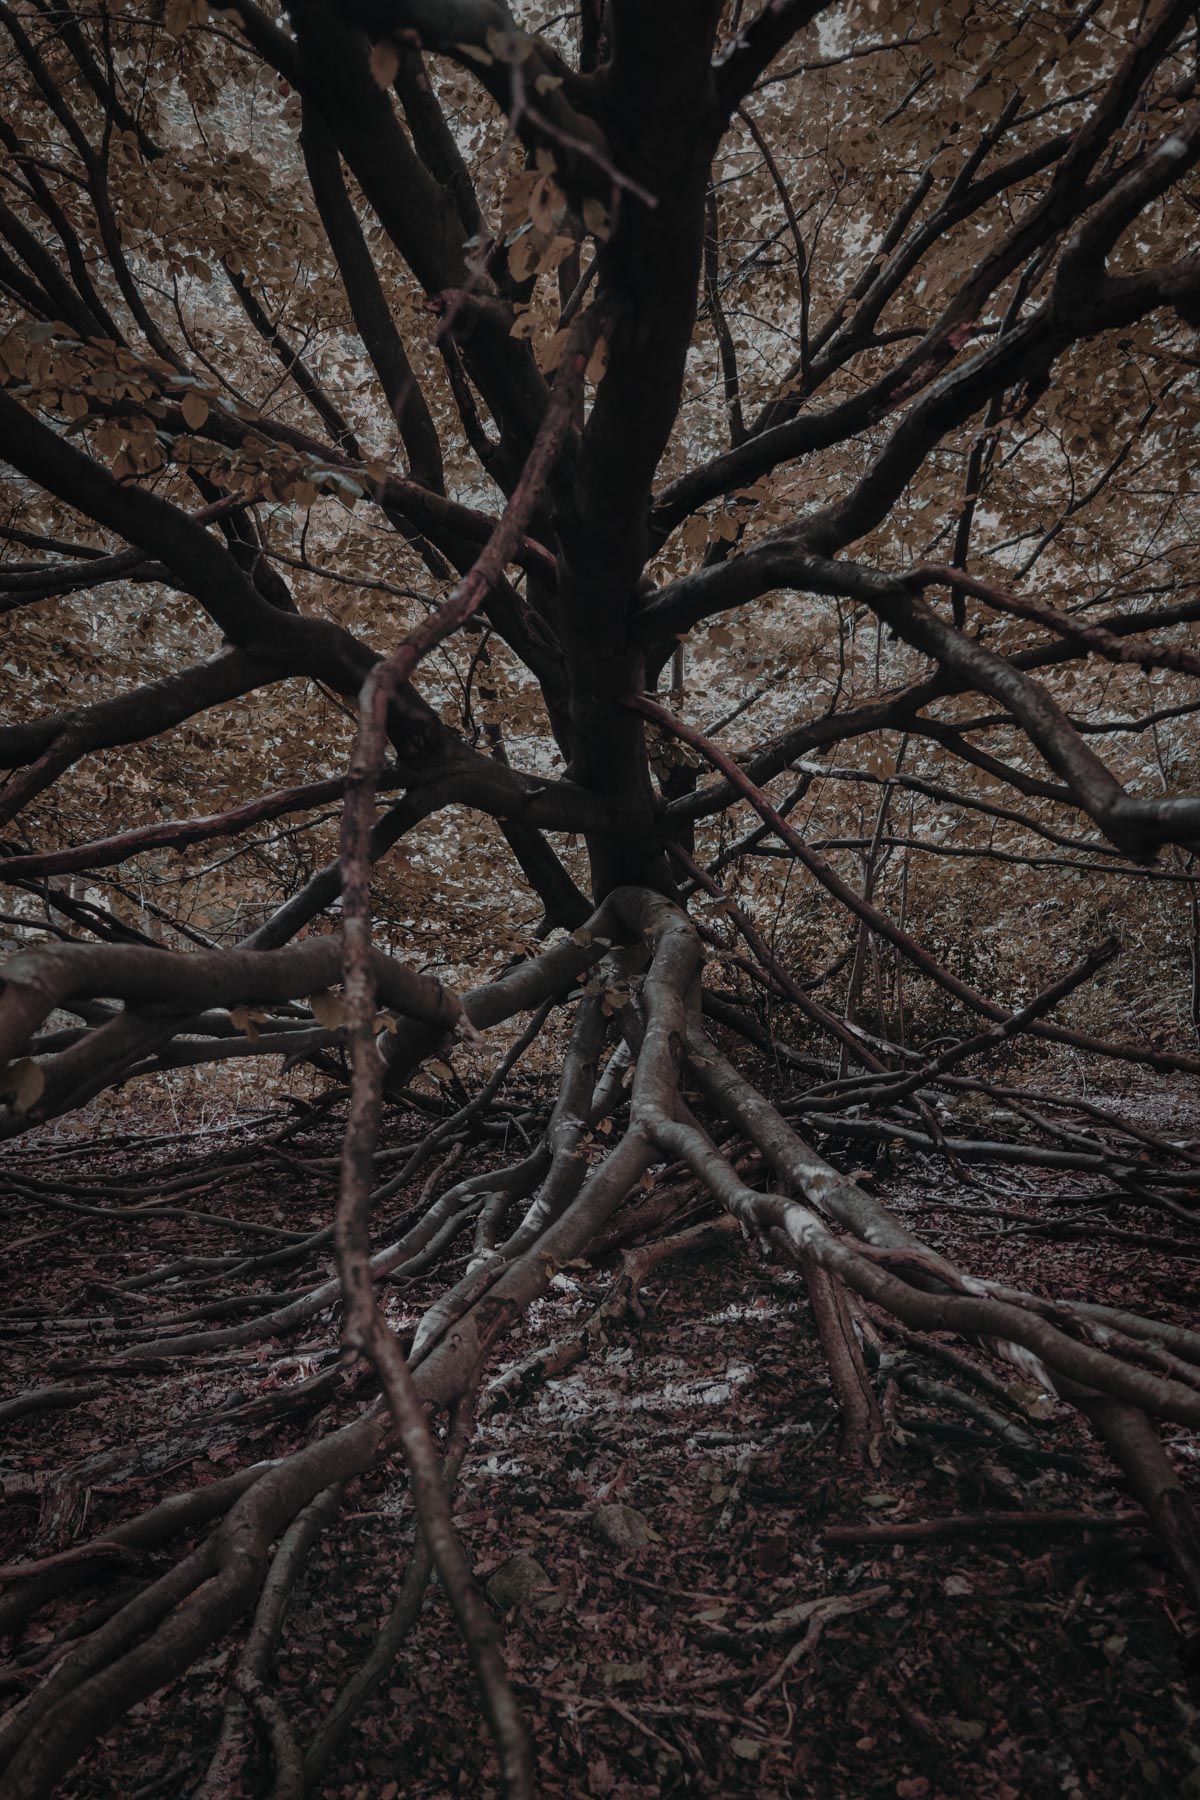 Dryads - The tree-bound